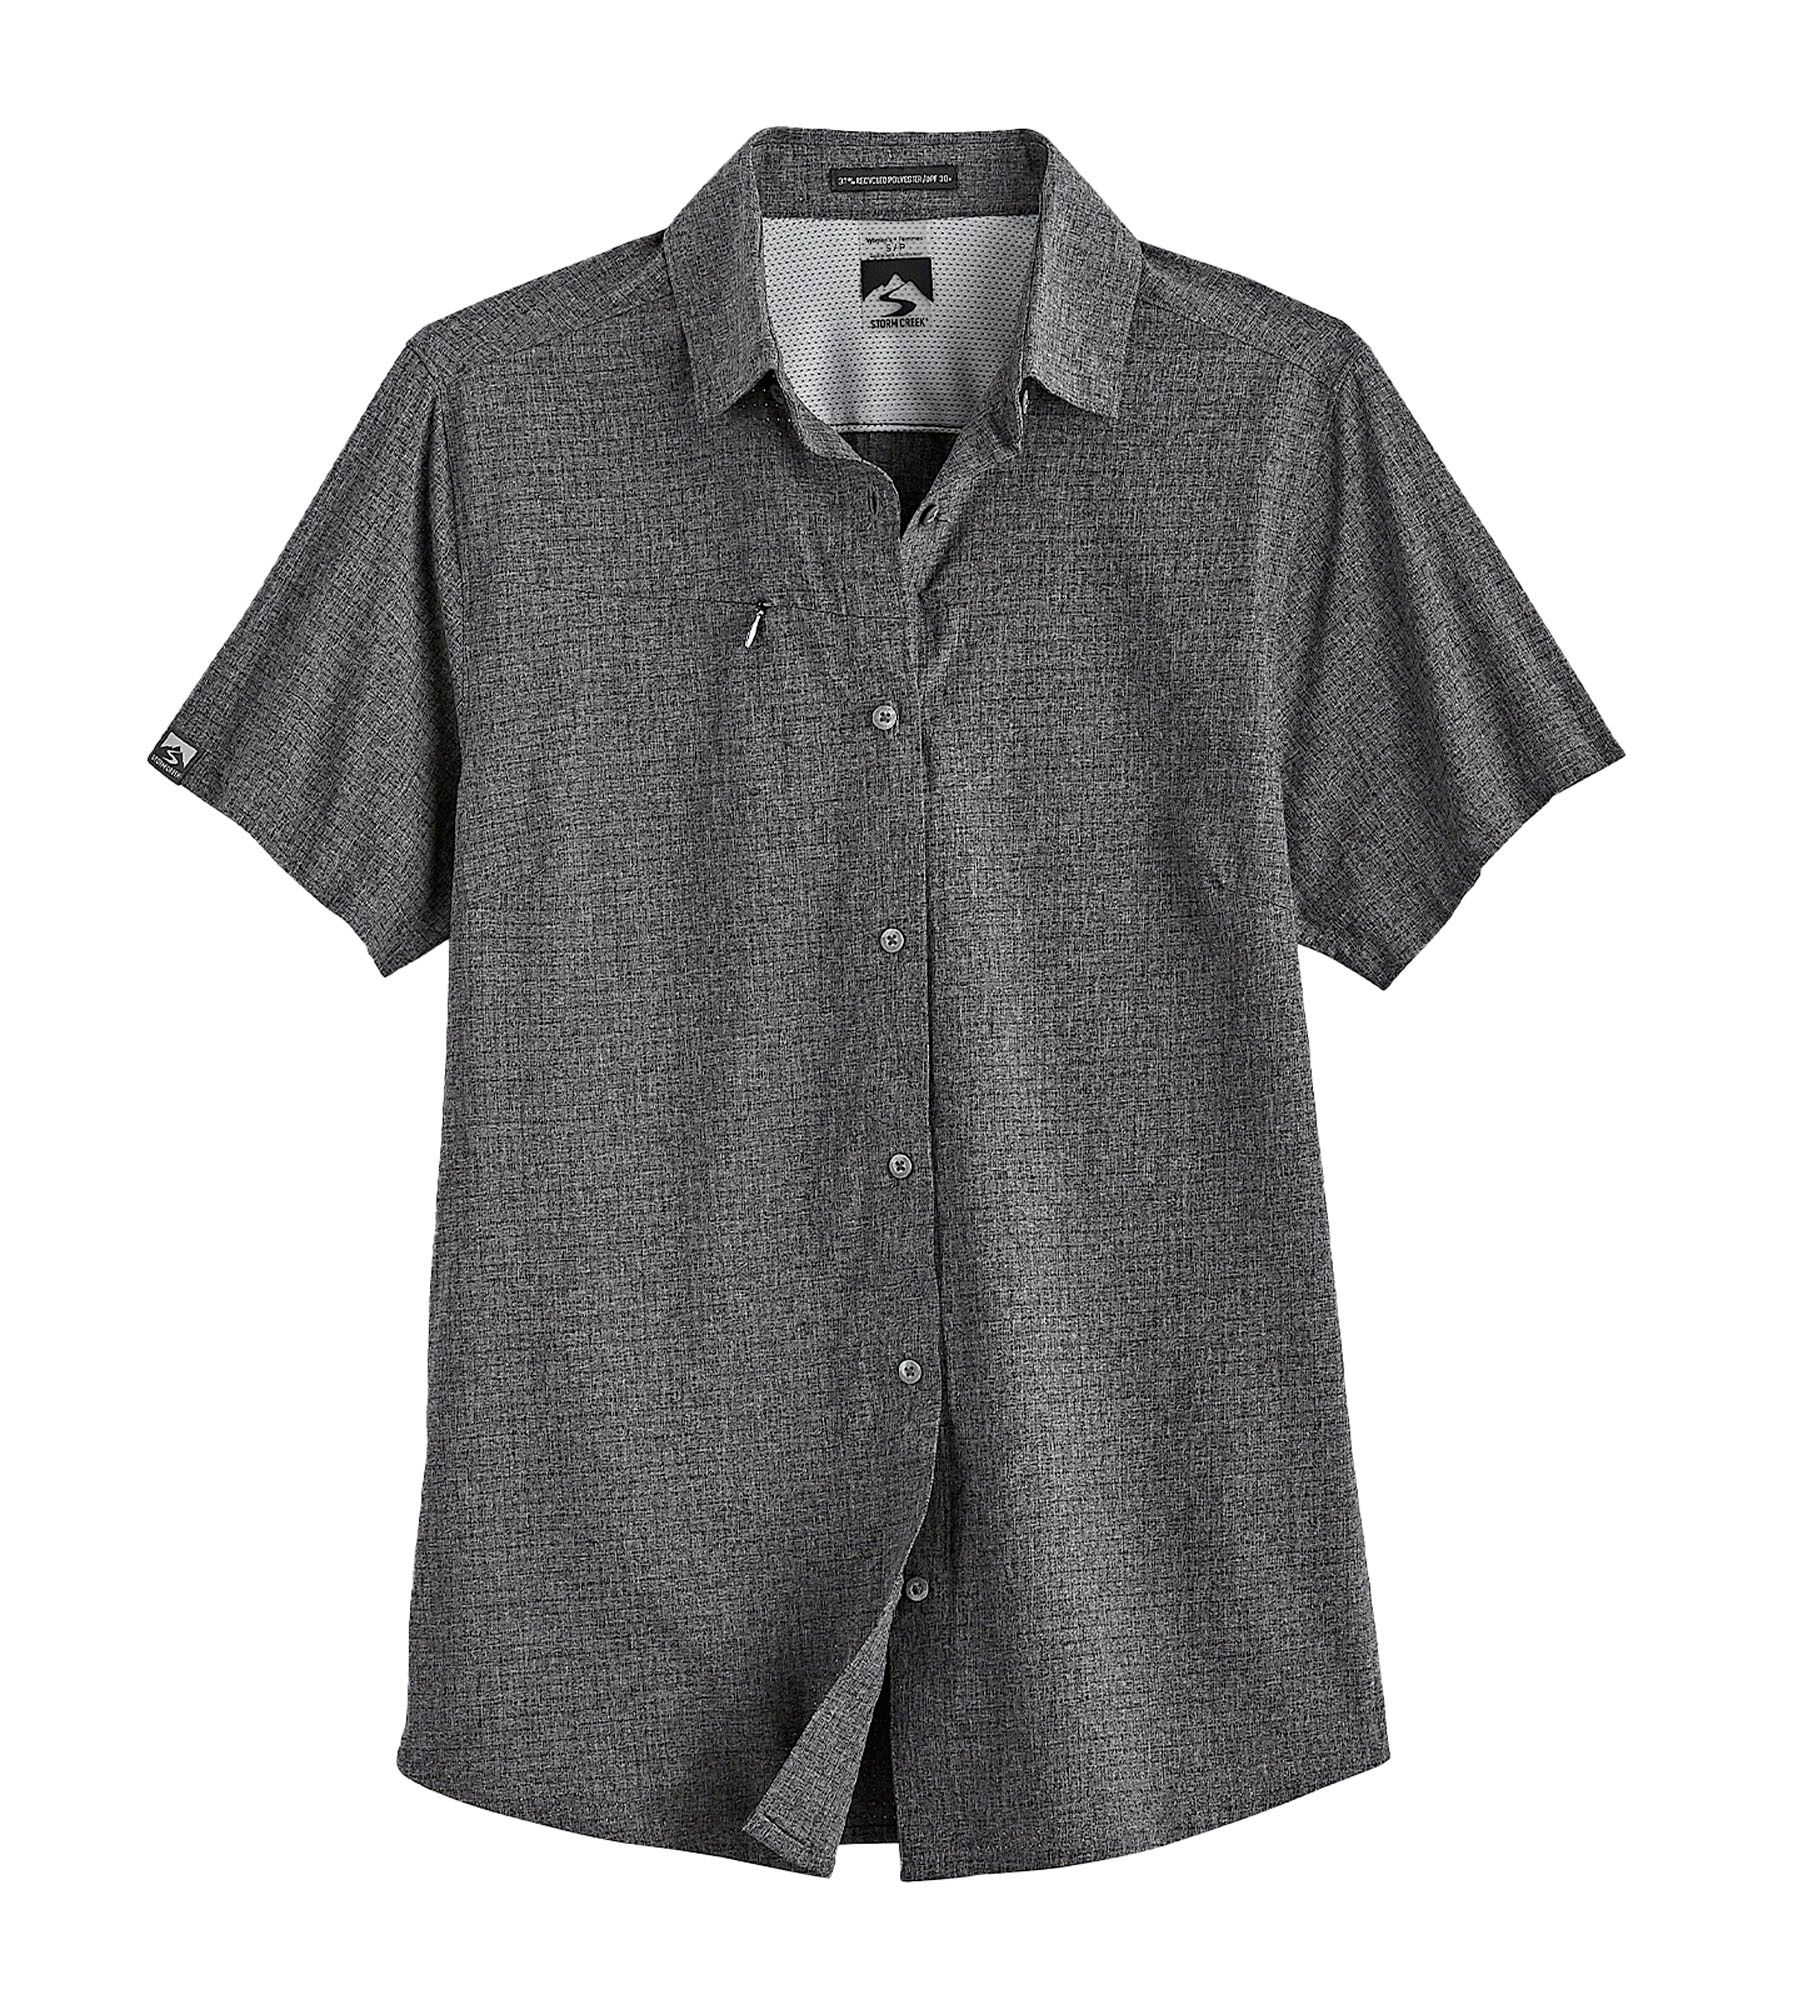 Storm Creek Naturalist Short-Sleeve Shirt for Ladies - Gray - XS